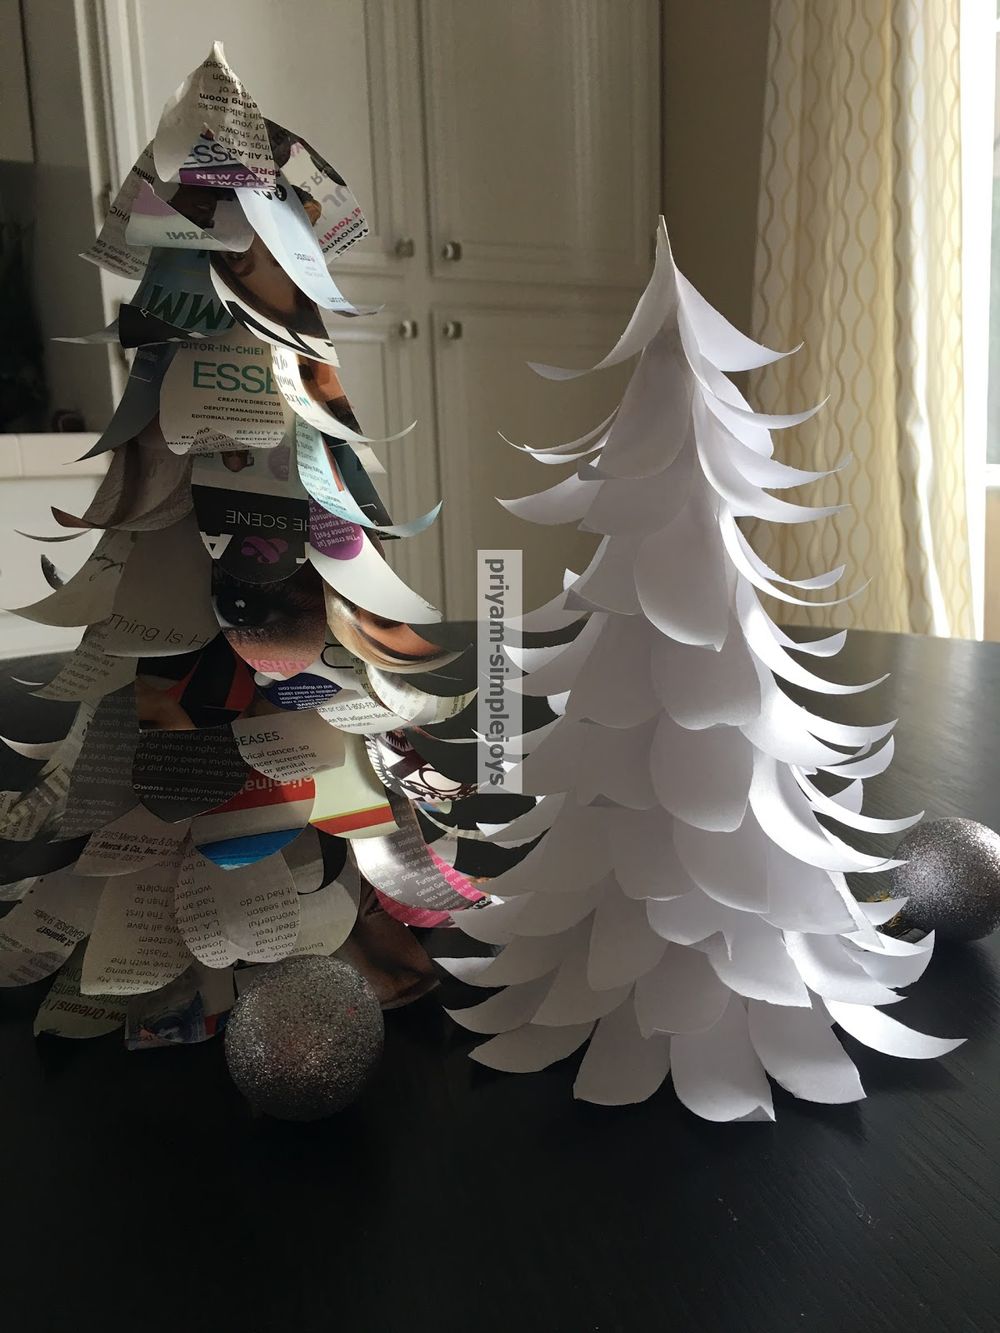 Layered paper christmas tree 